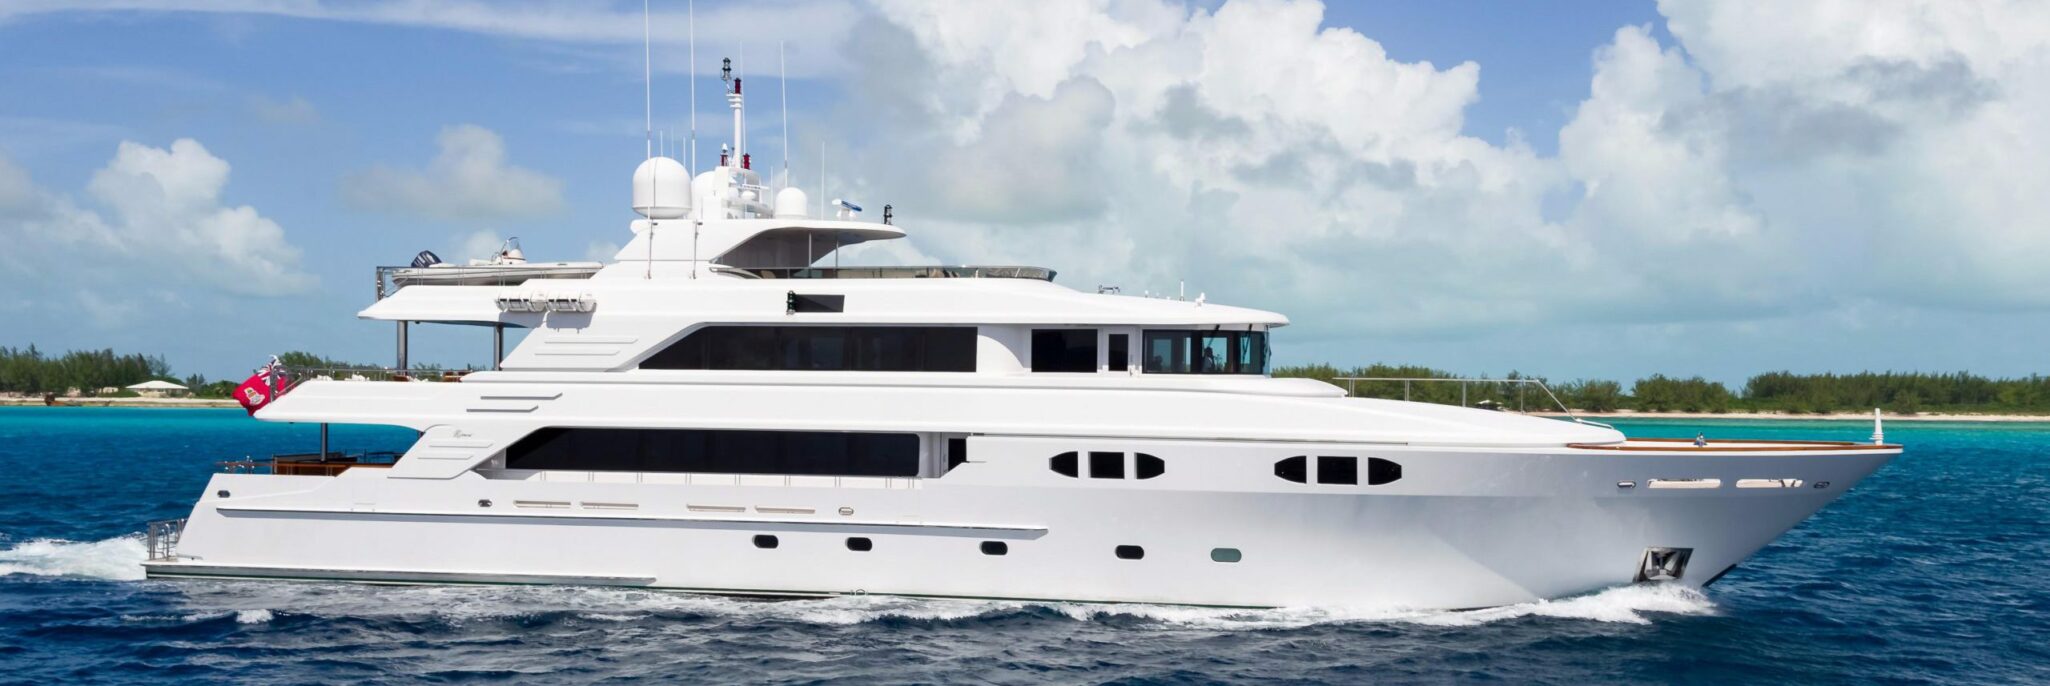 canmar yacht sales richmond bc